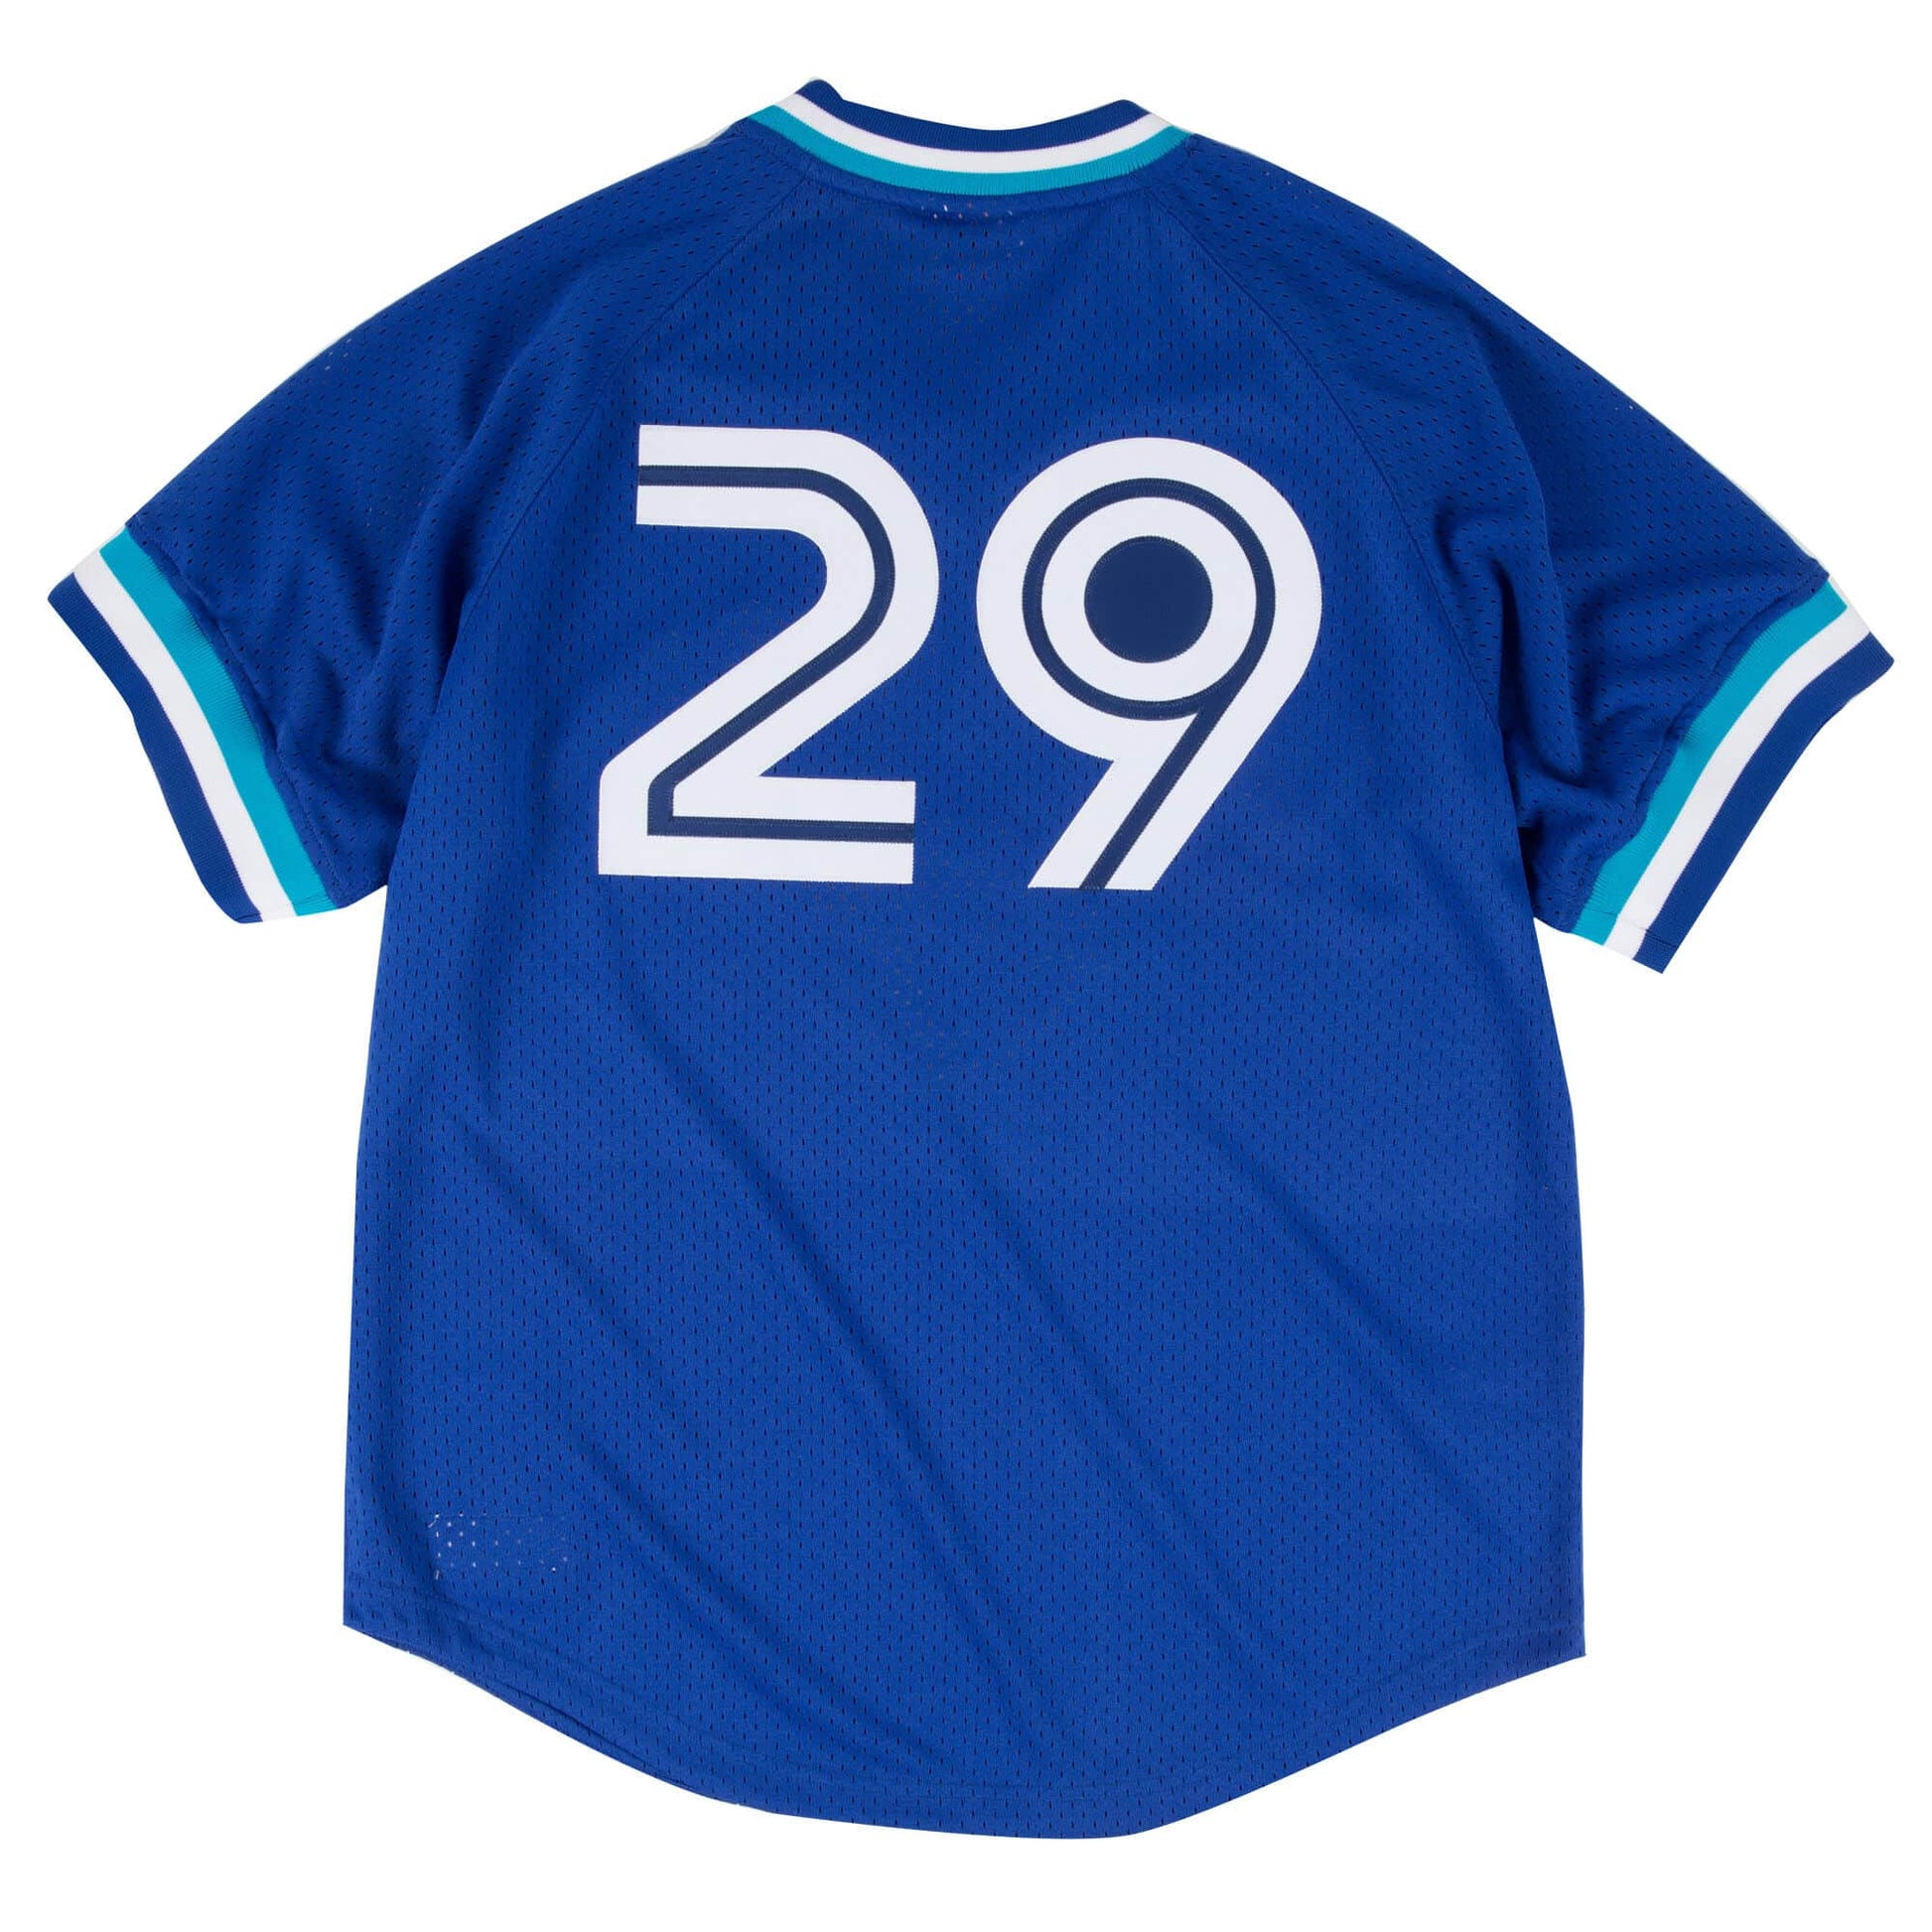 Retro Joe Carter Toronto Blue Jays #29 Gray LARGE Baseball Jersey